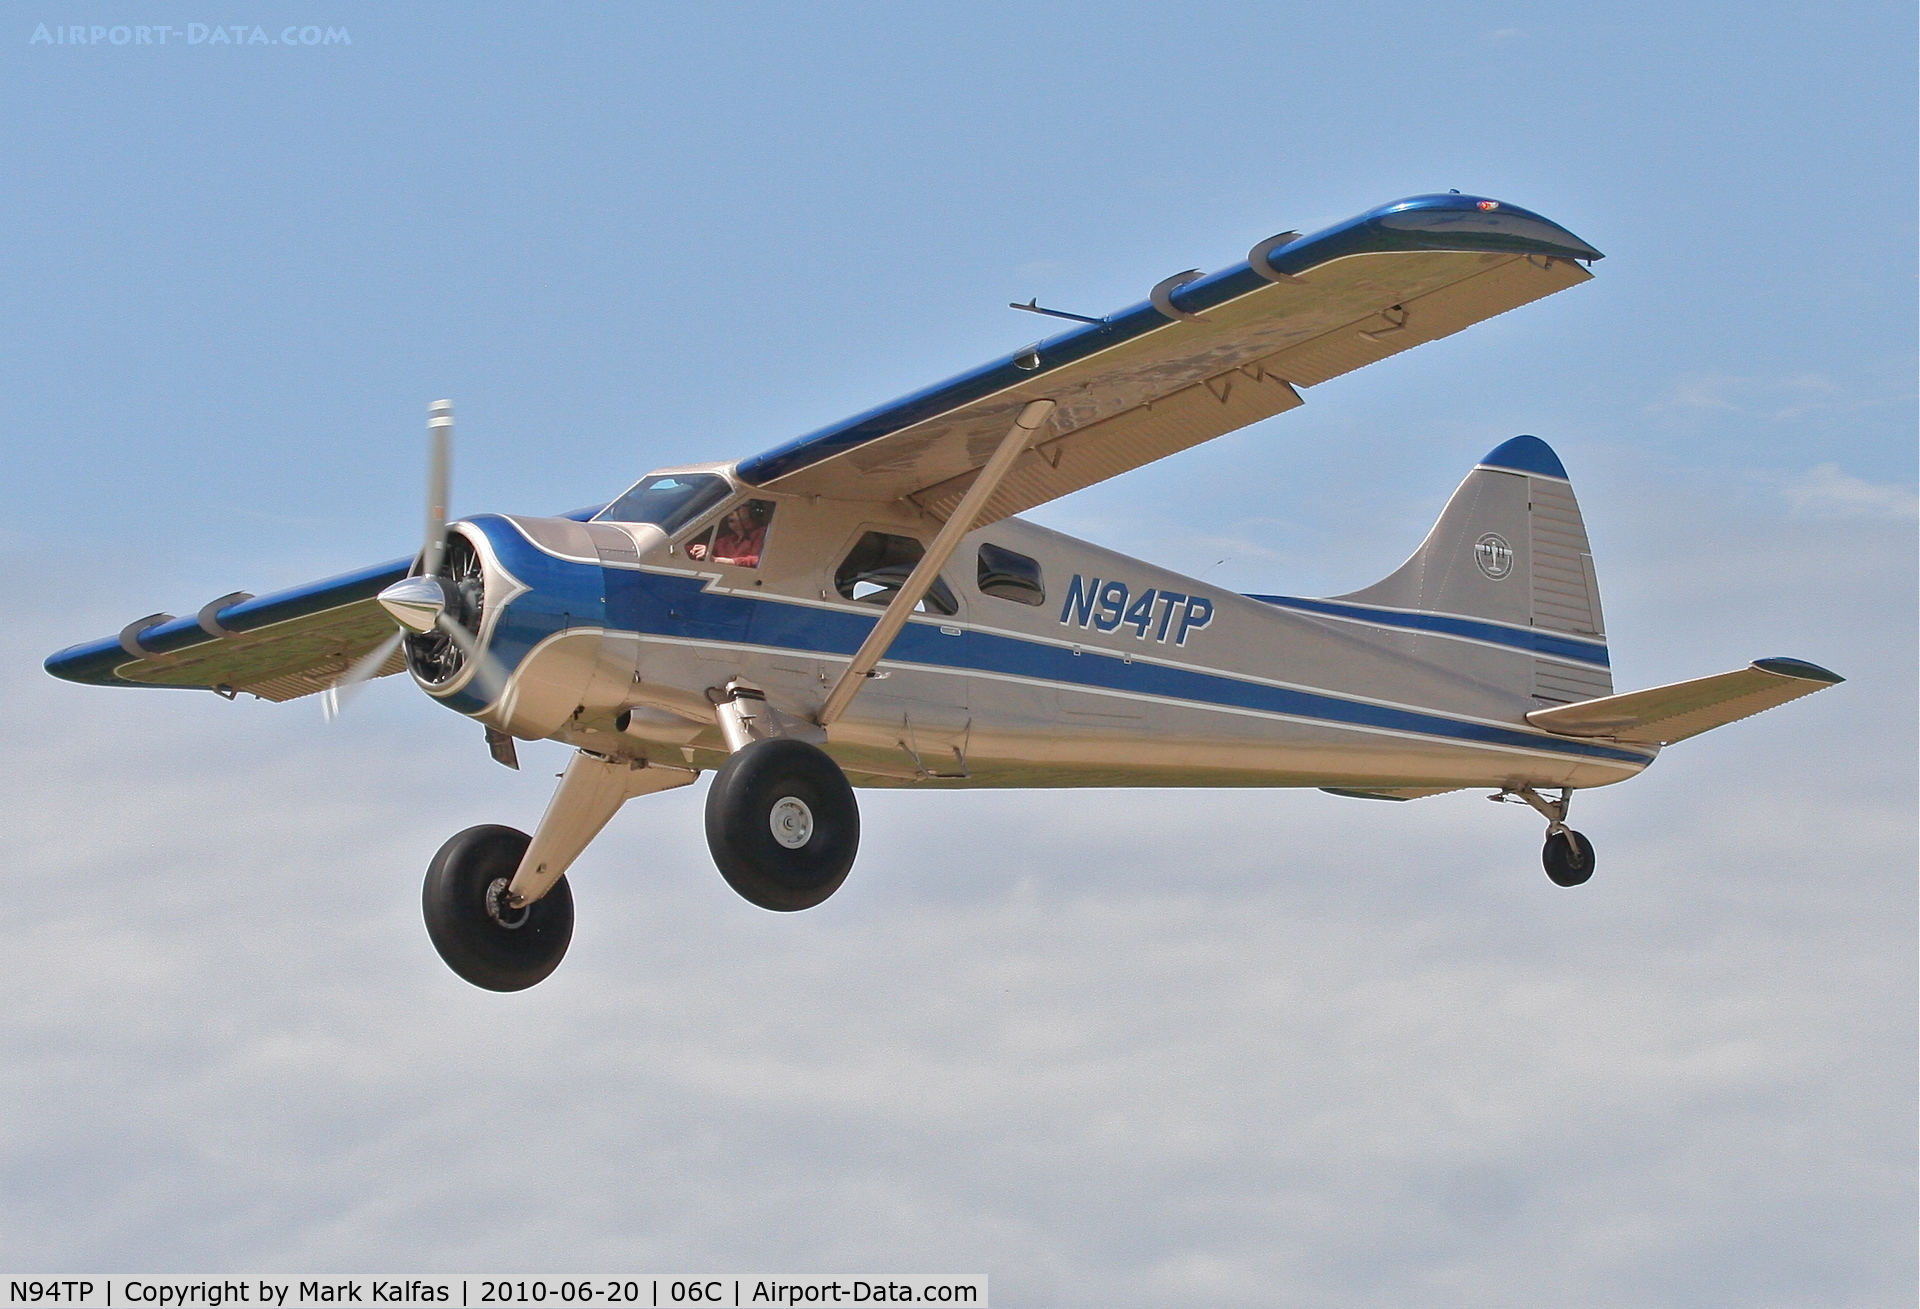 N94TP, 1999 De Havilland Canada DHC-2 Beaver Mk.I C/N 1942DP, Dehavilland/Peters DHC-2, N94TP departing RWY 11 06C (Schaumburg, Il).